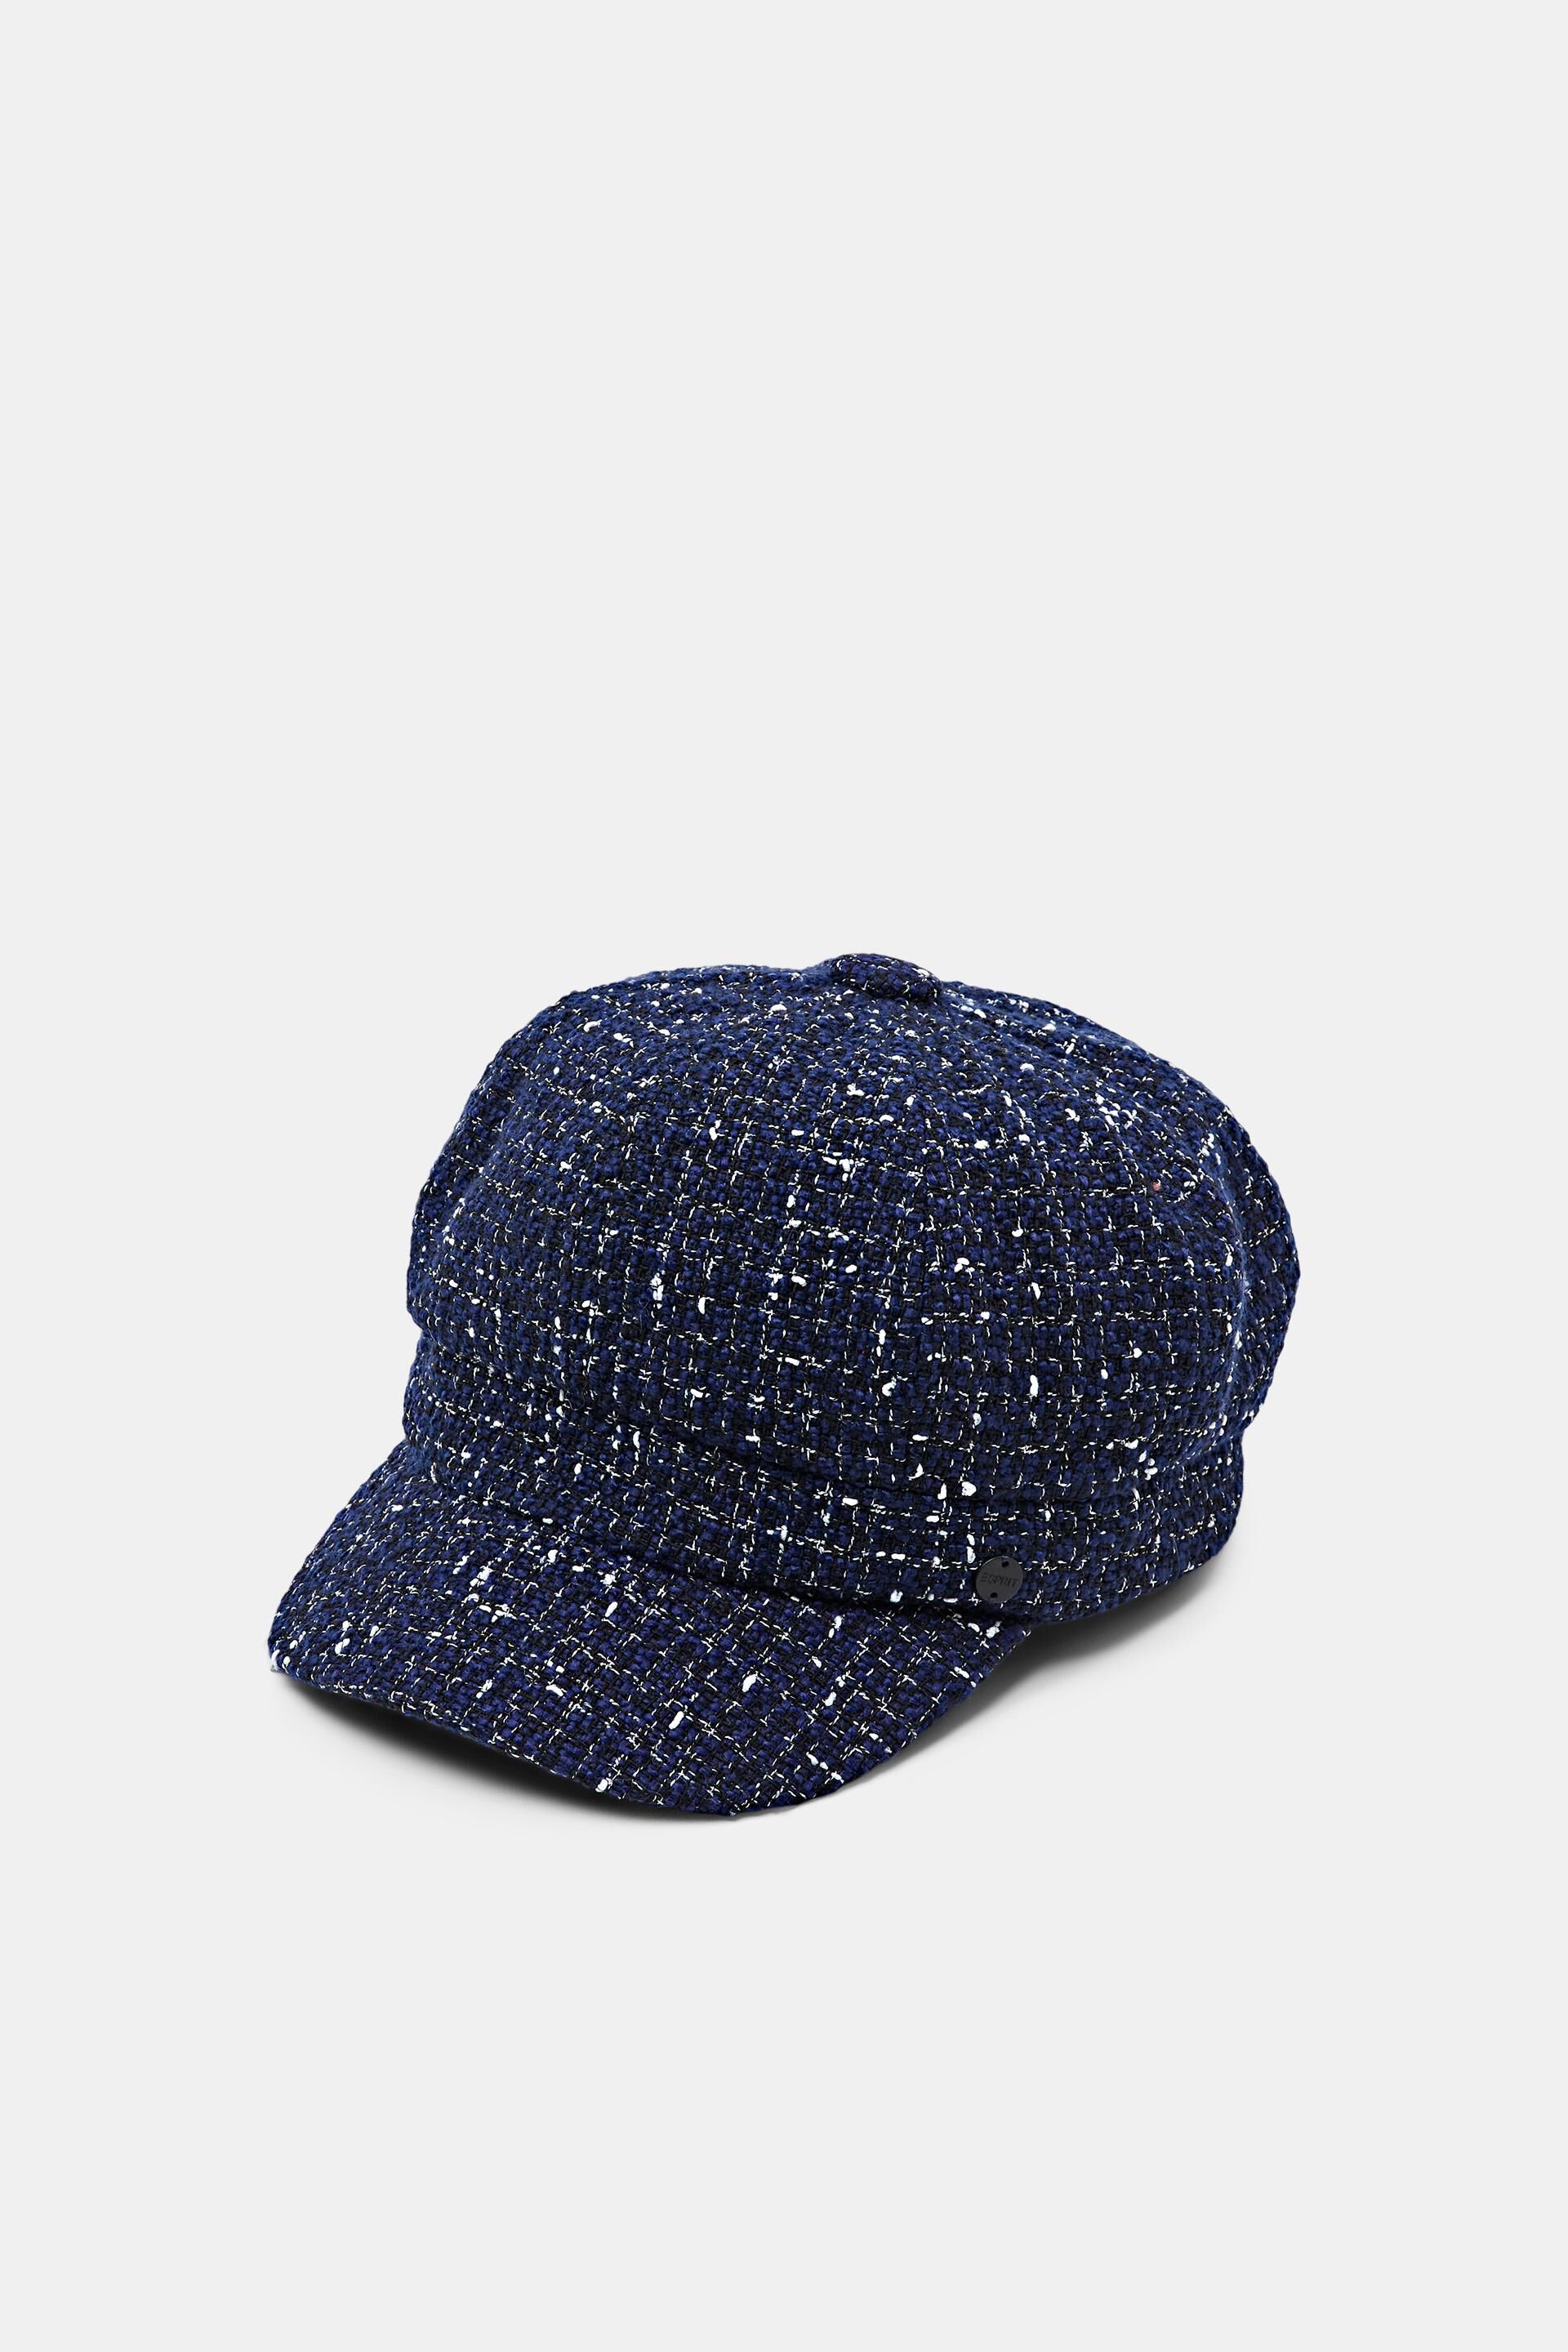 Esprit Online Store Hats/Caps